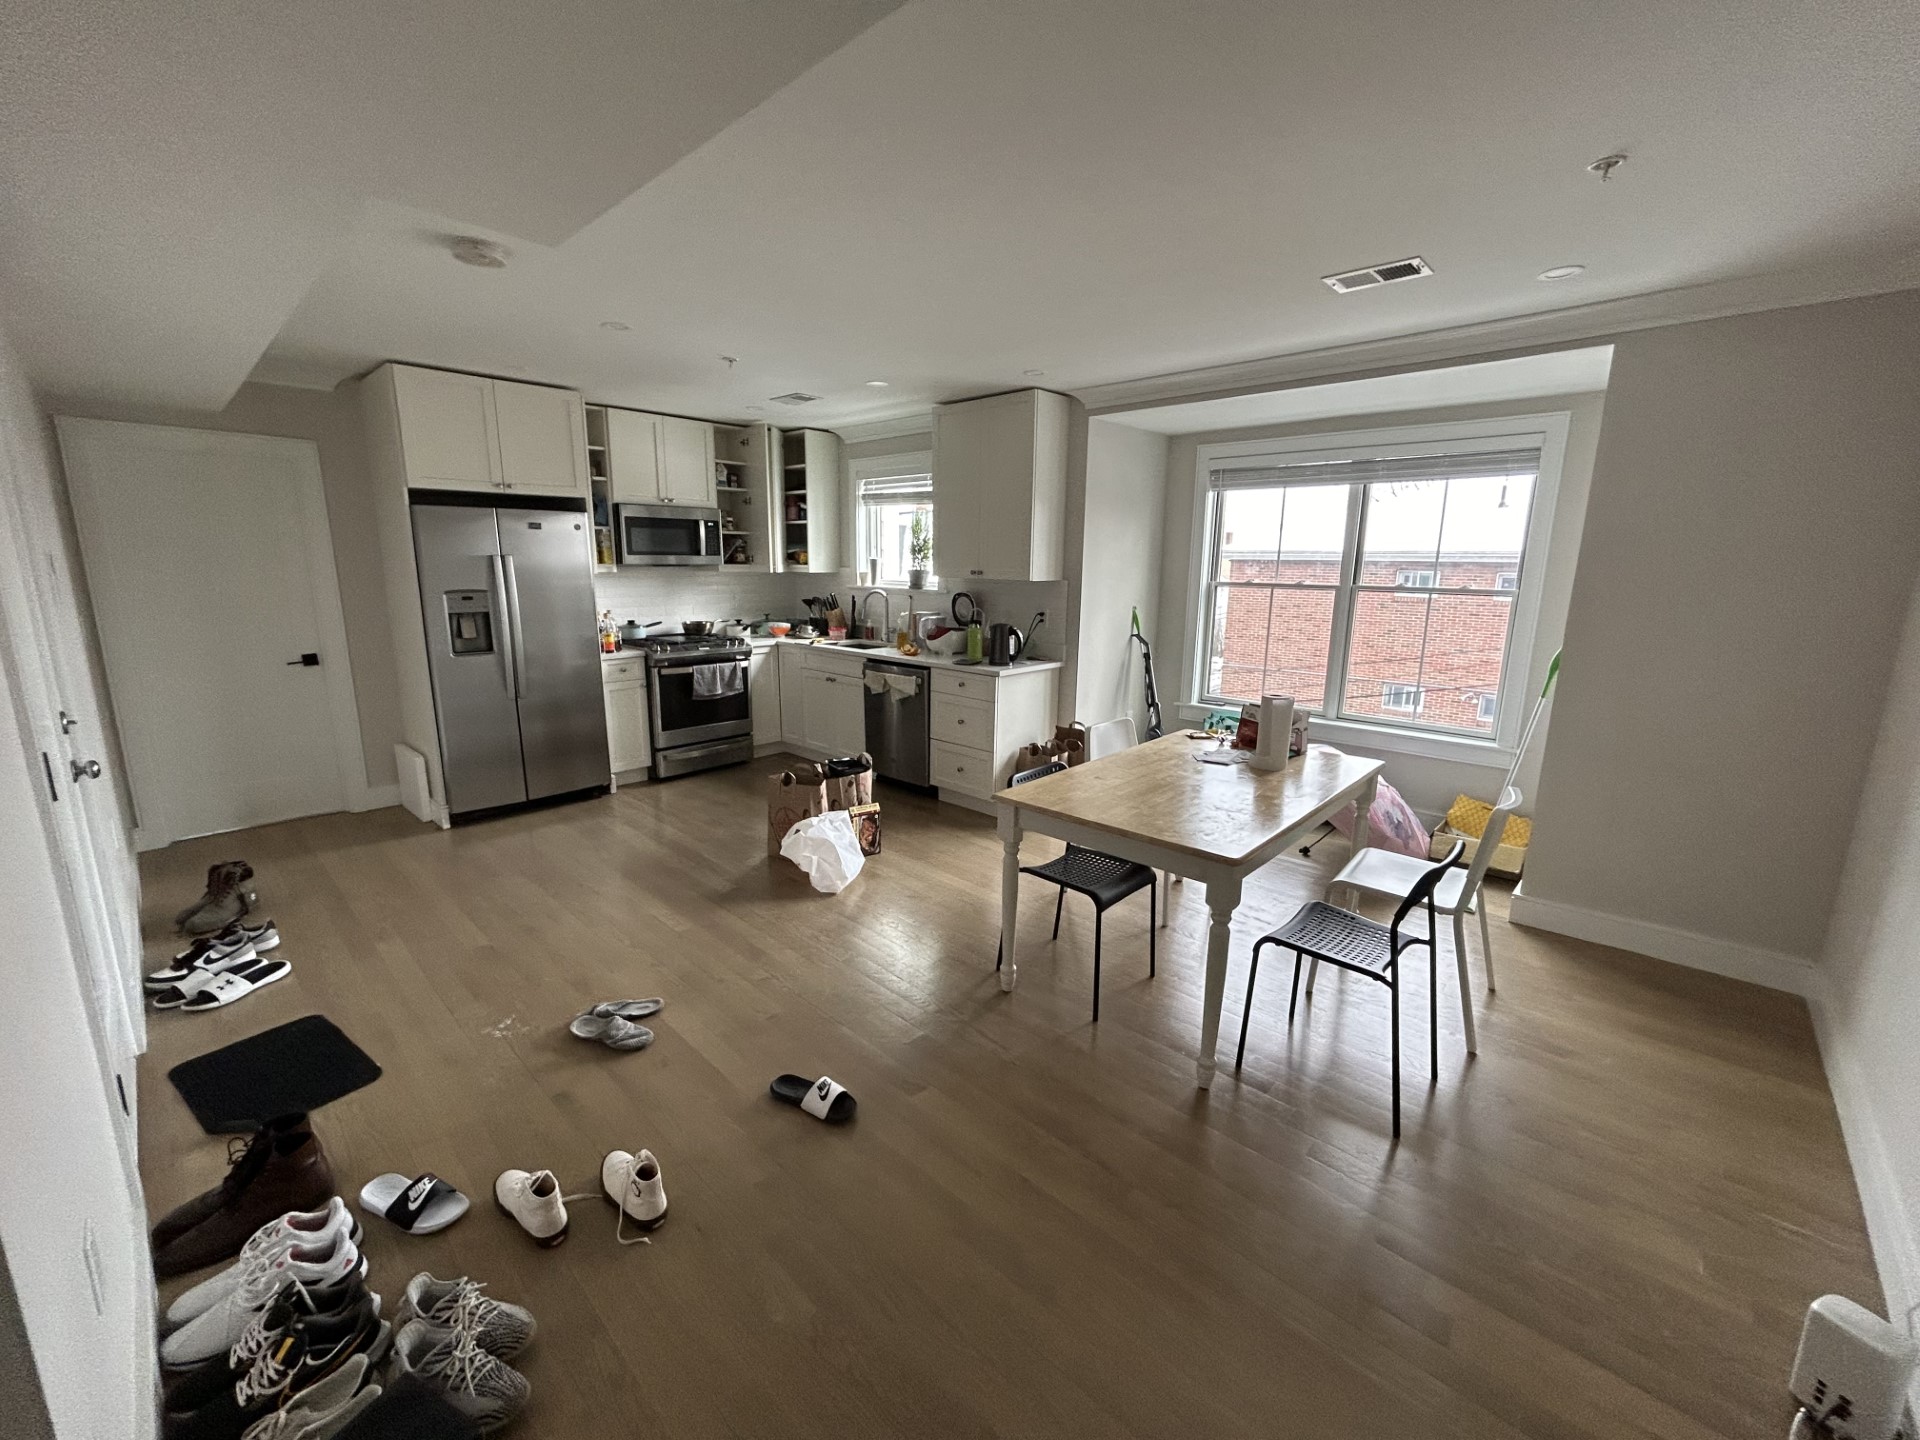 Photos of apartment on Everett St.,Boston MA 02134